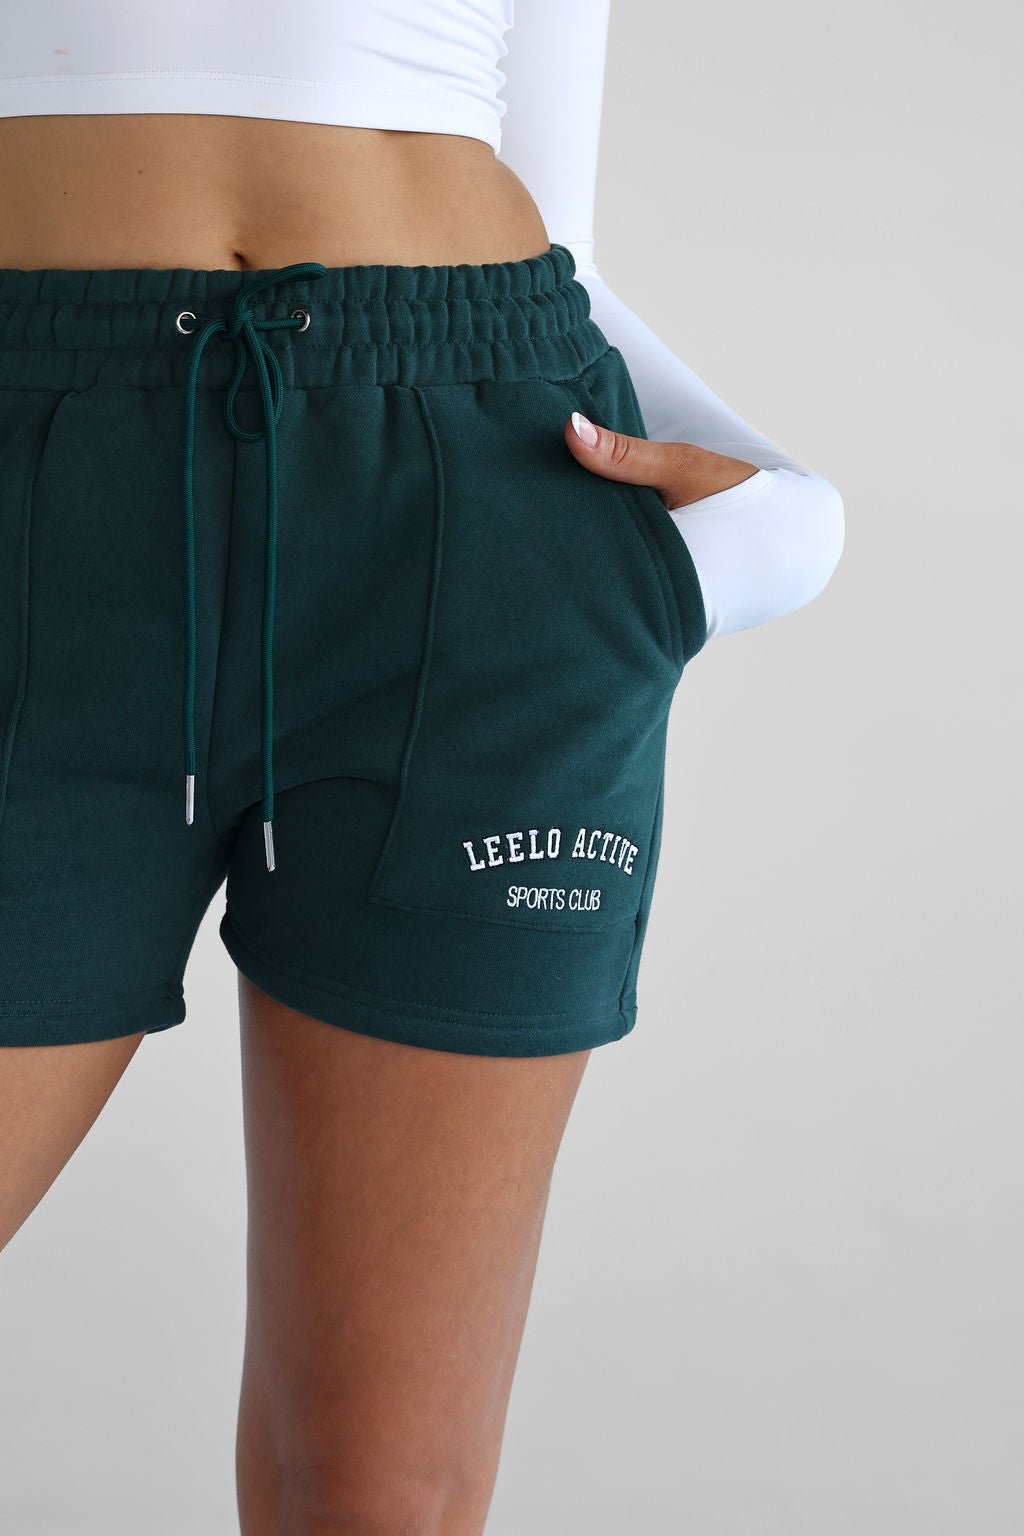 Sports Club Shorts - Boston Green - LEELO ACTIVE